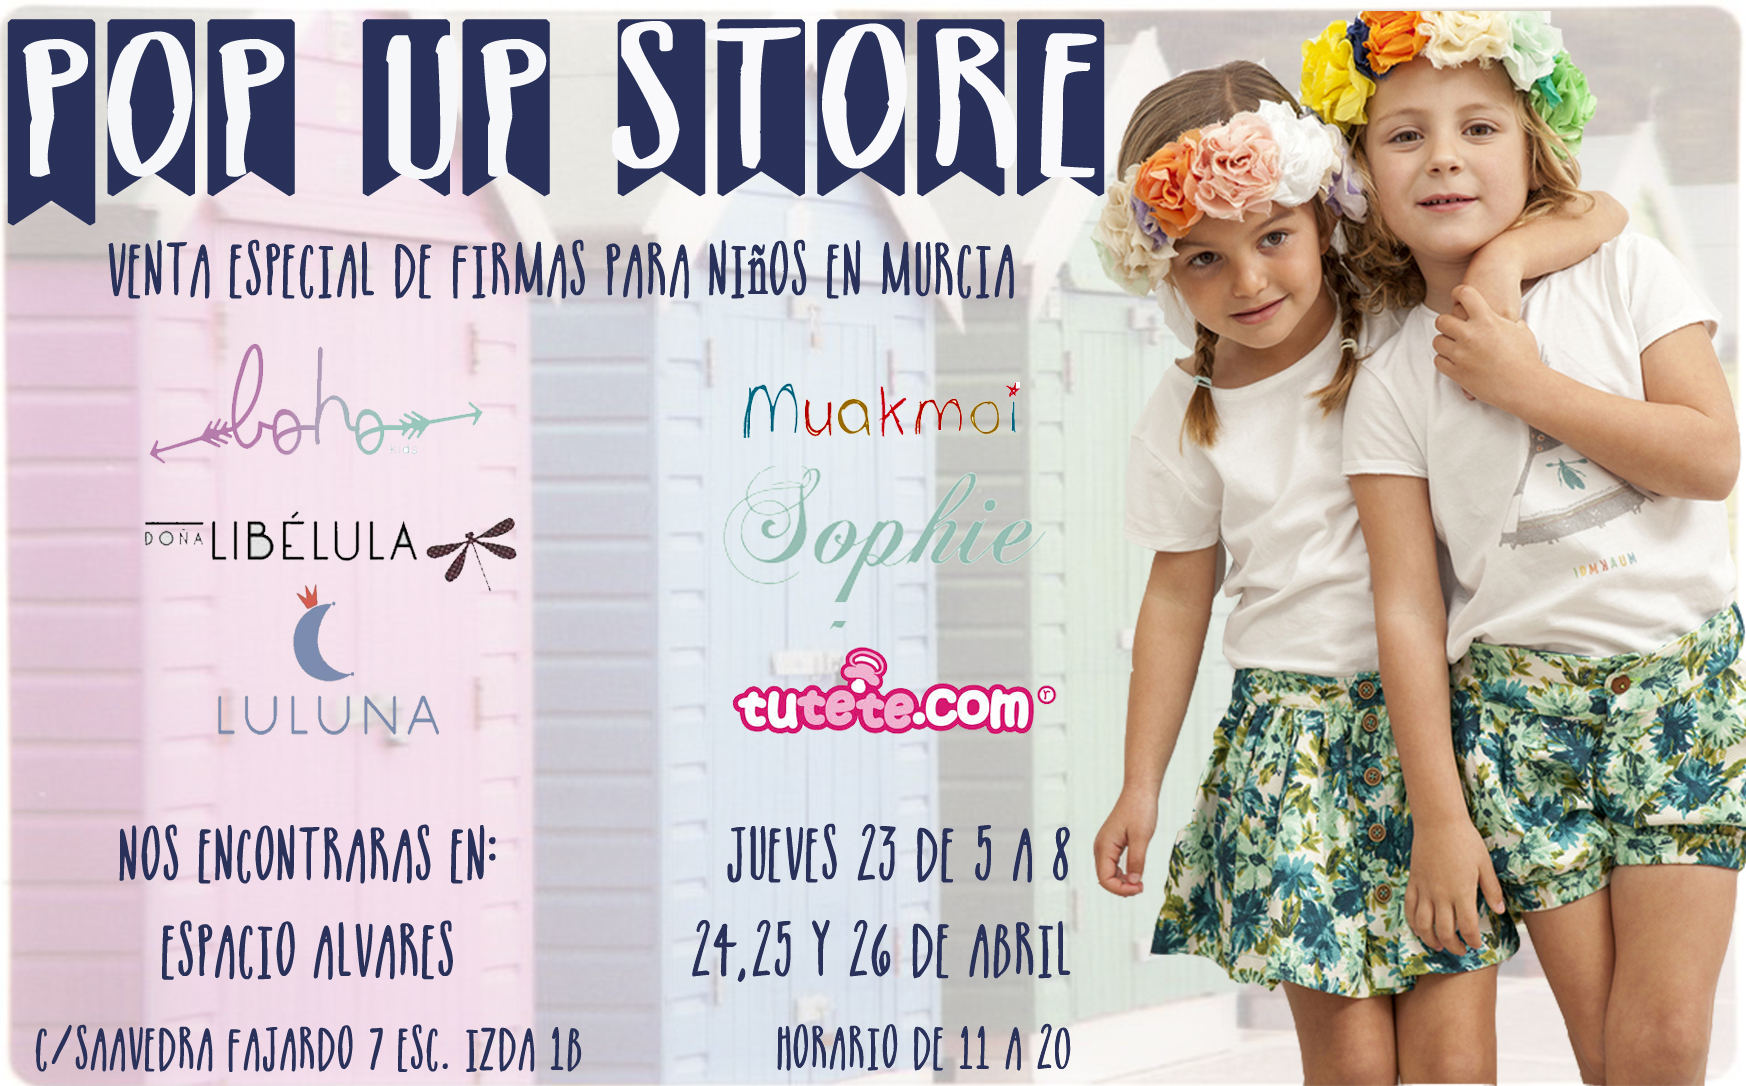 Pop Up Store Niños - Murcia